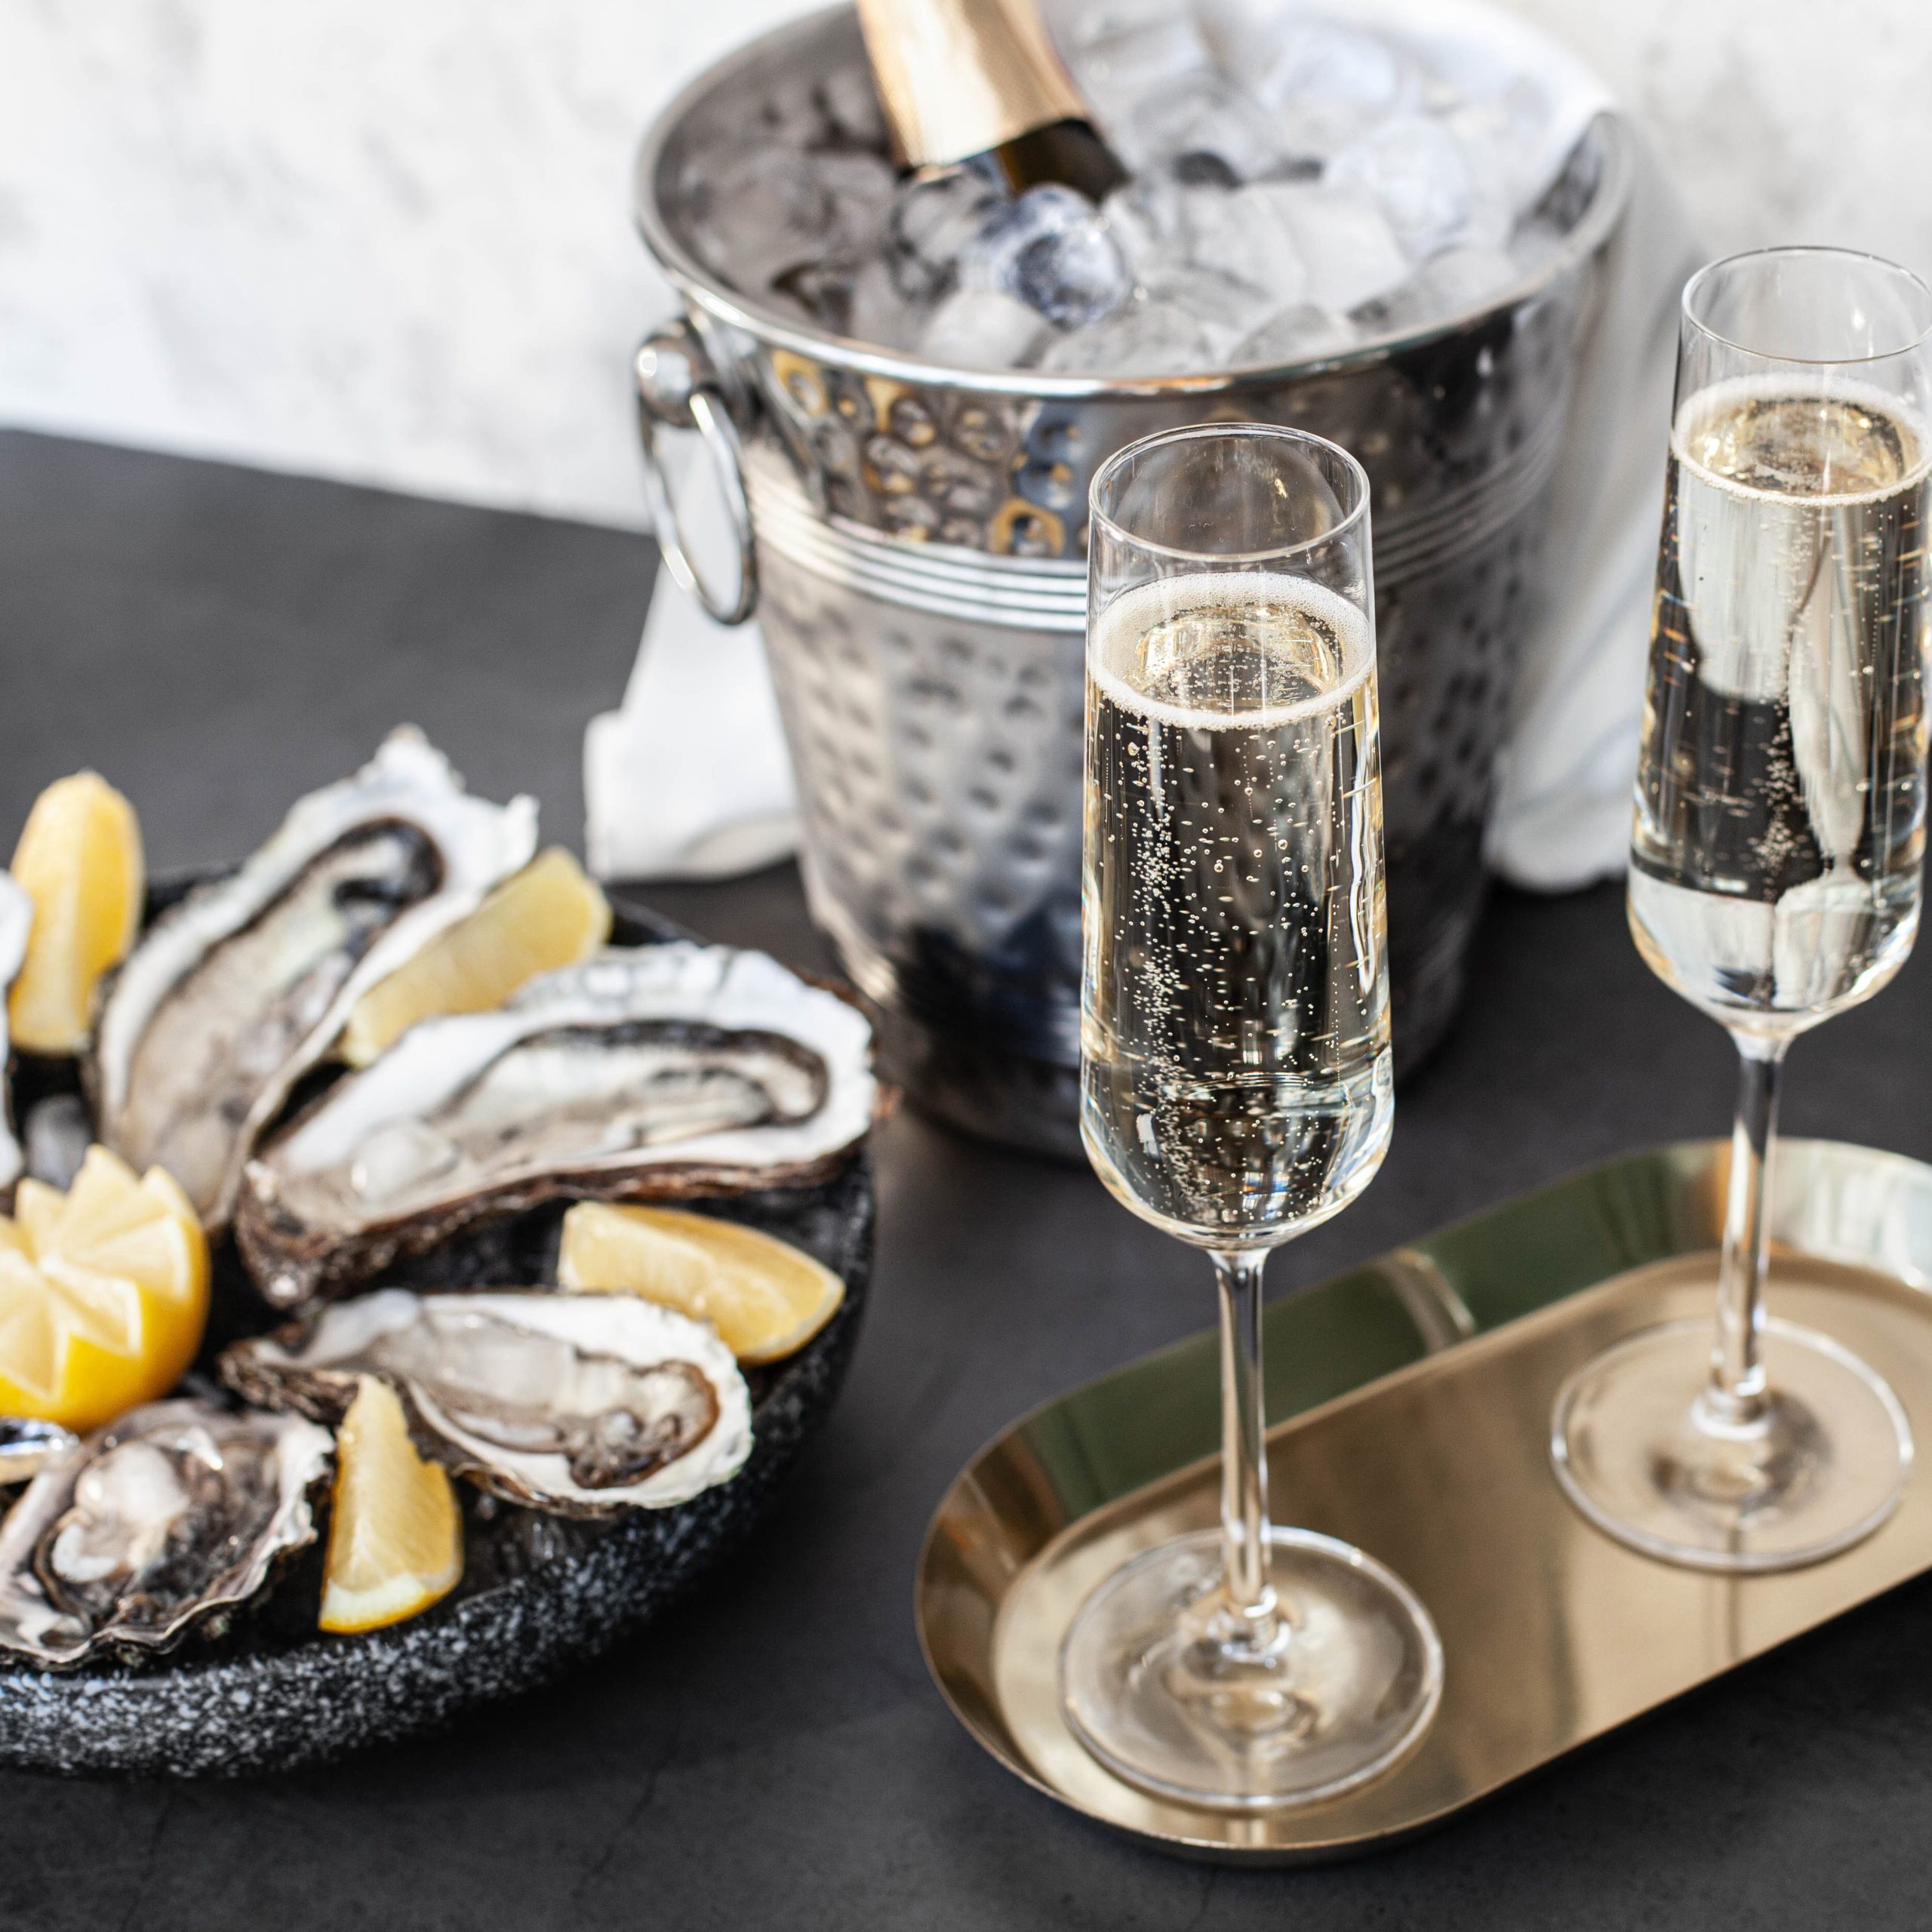 romantic oyster recipes, avon ct